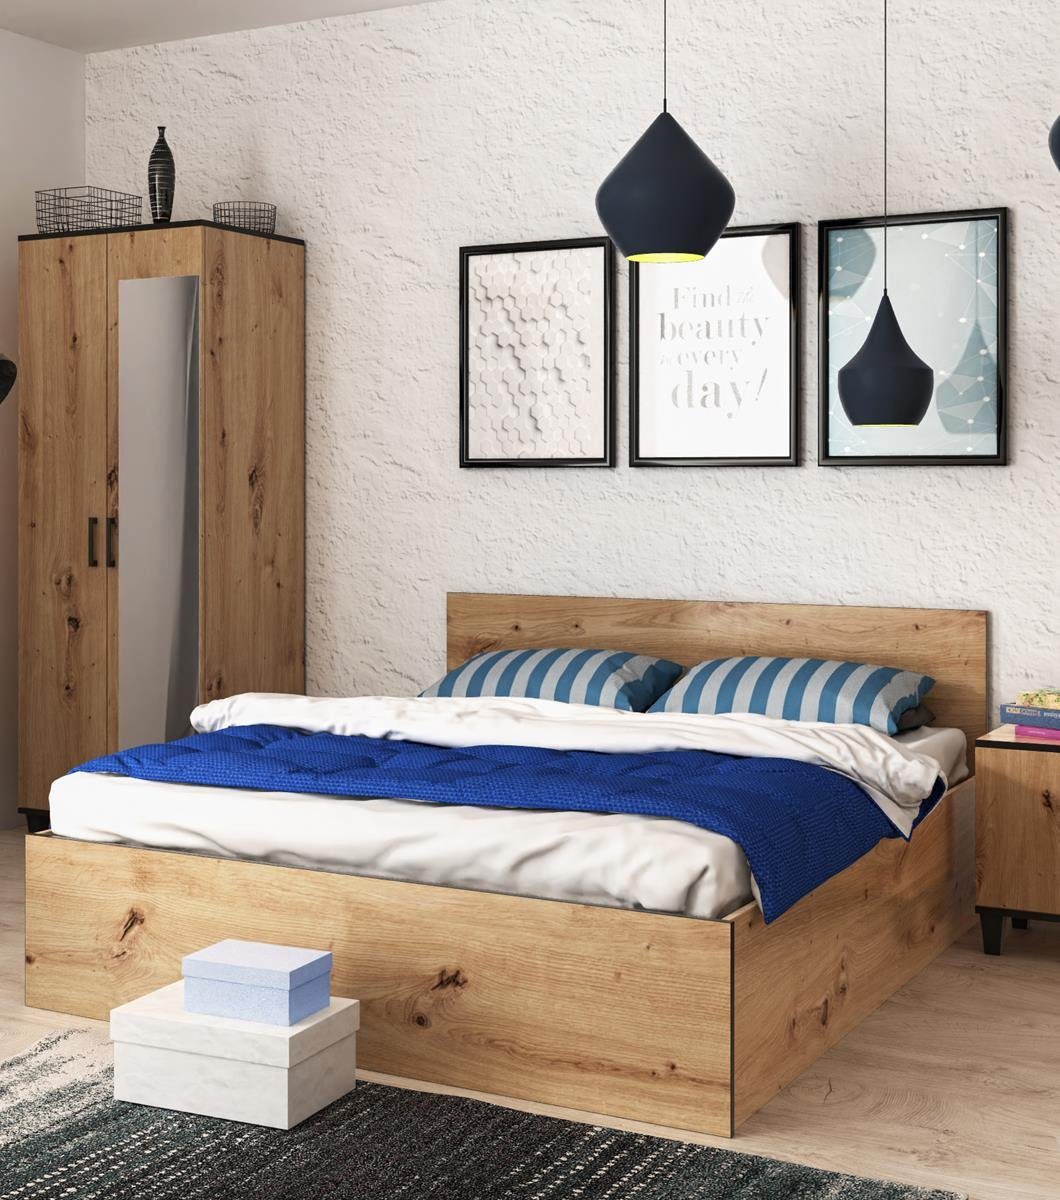 Beautysofa Holzbett »C10«, mit Holzrahmen und Lattenrost, 160x200 cm Bett,  im Loft Stil, inklusive Bettkasten